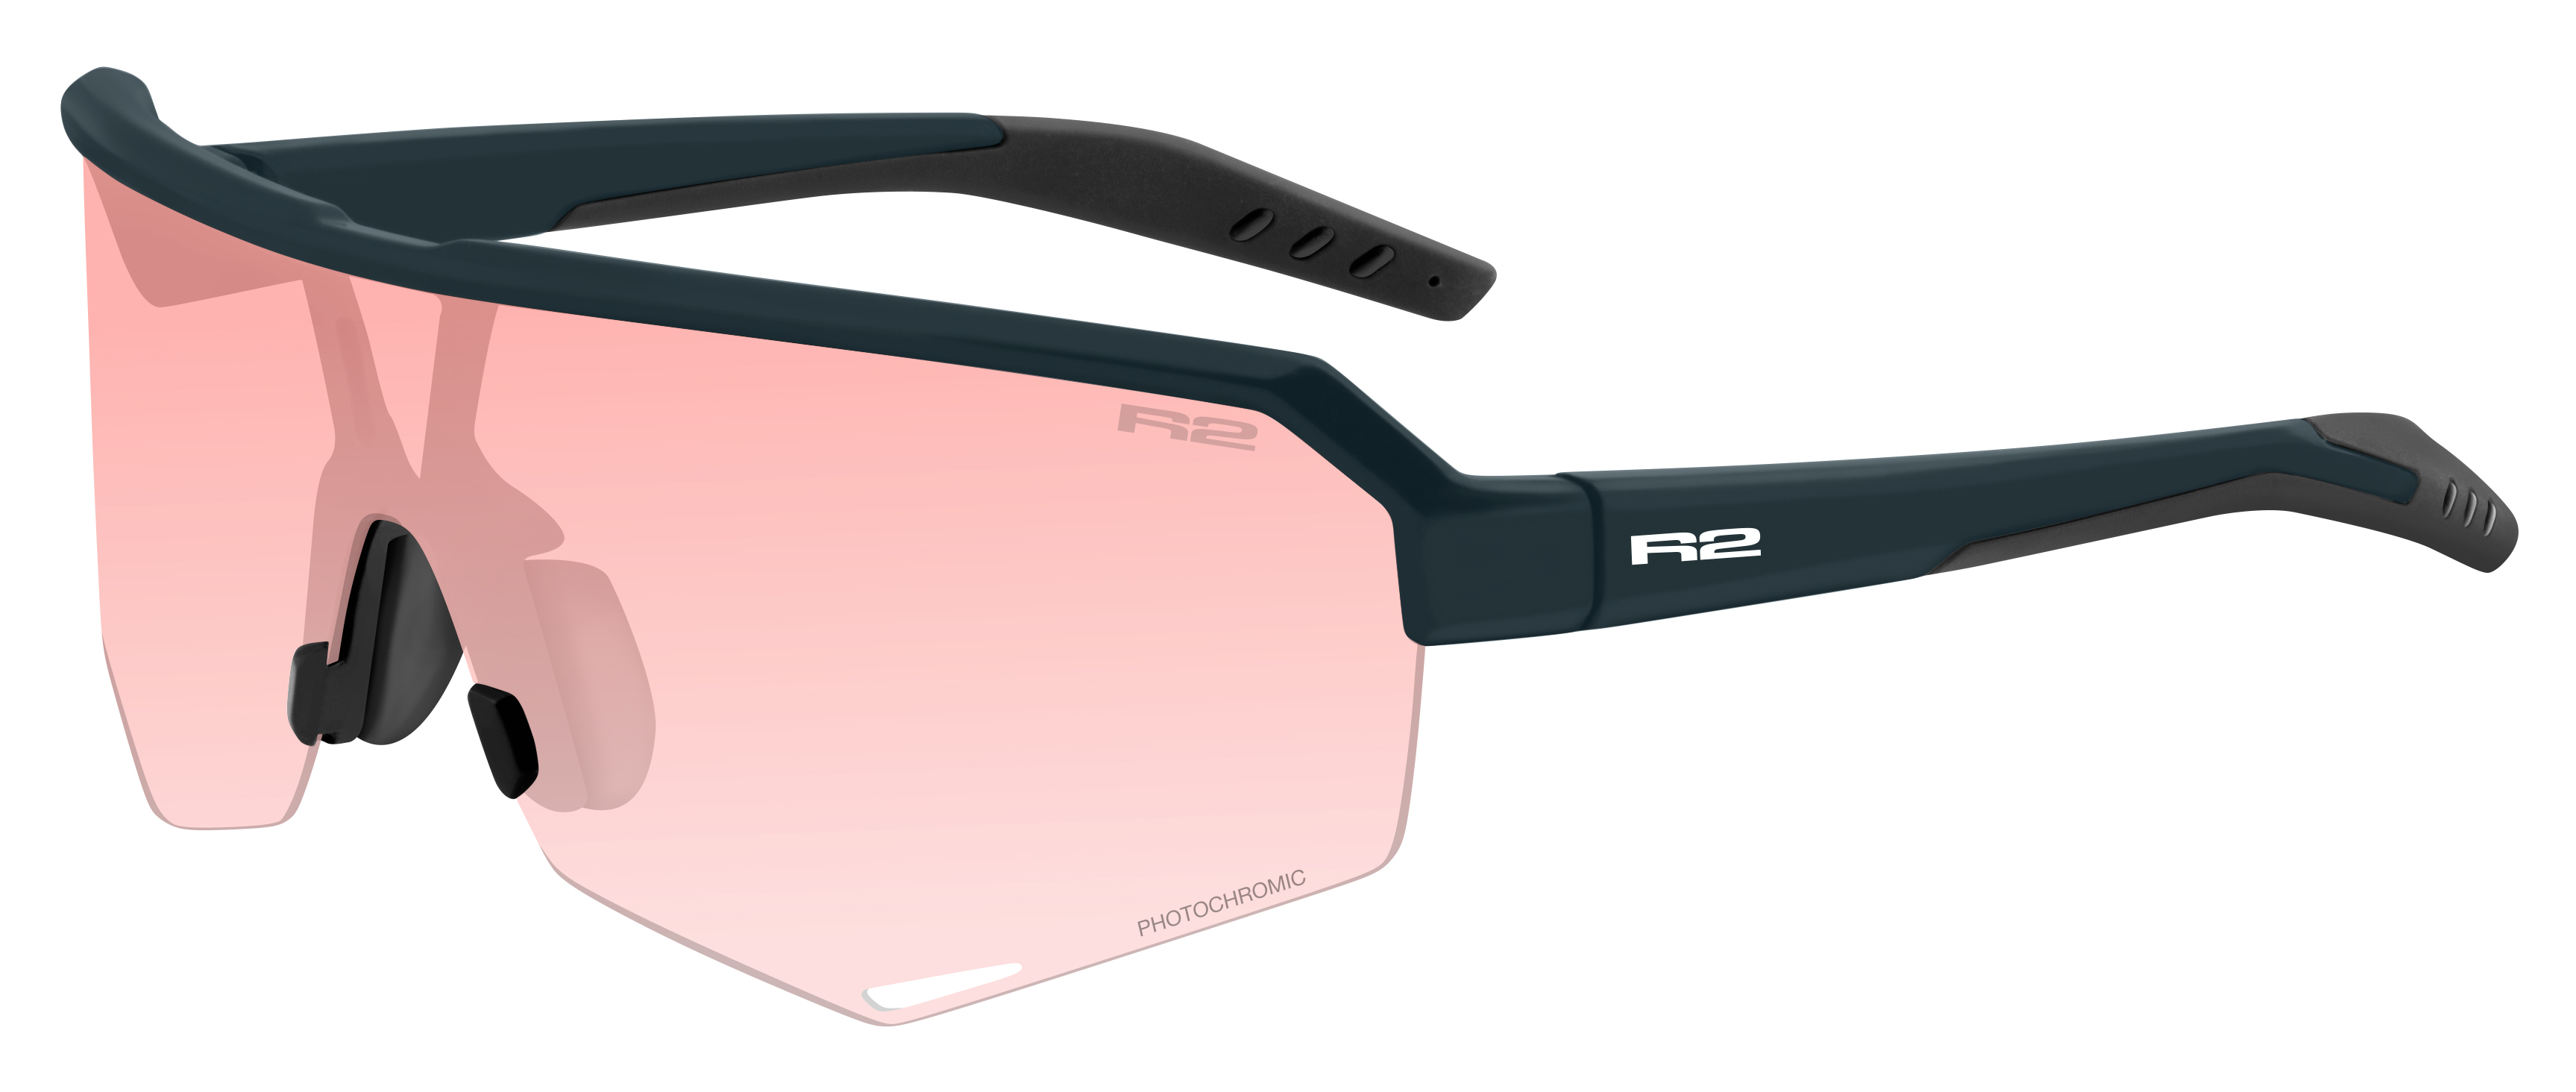 Photochromatic sunglasses  R2 FLUKE AT100J